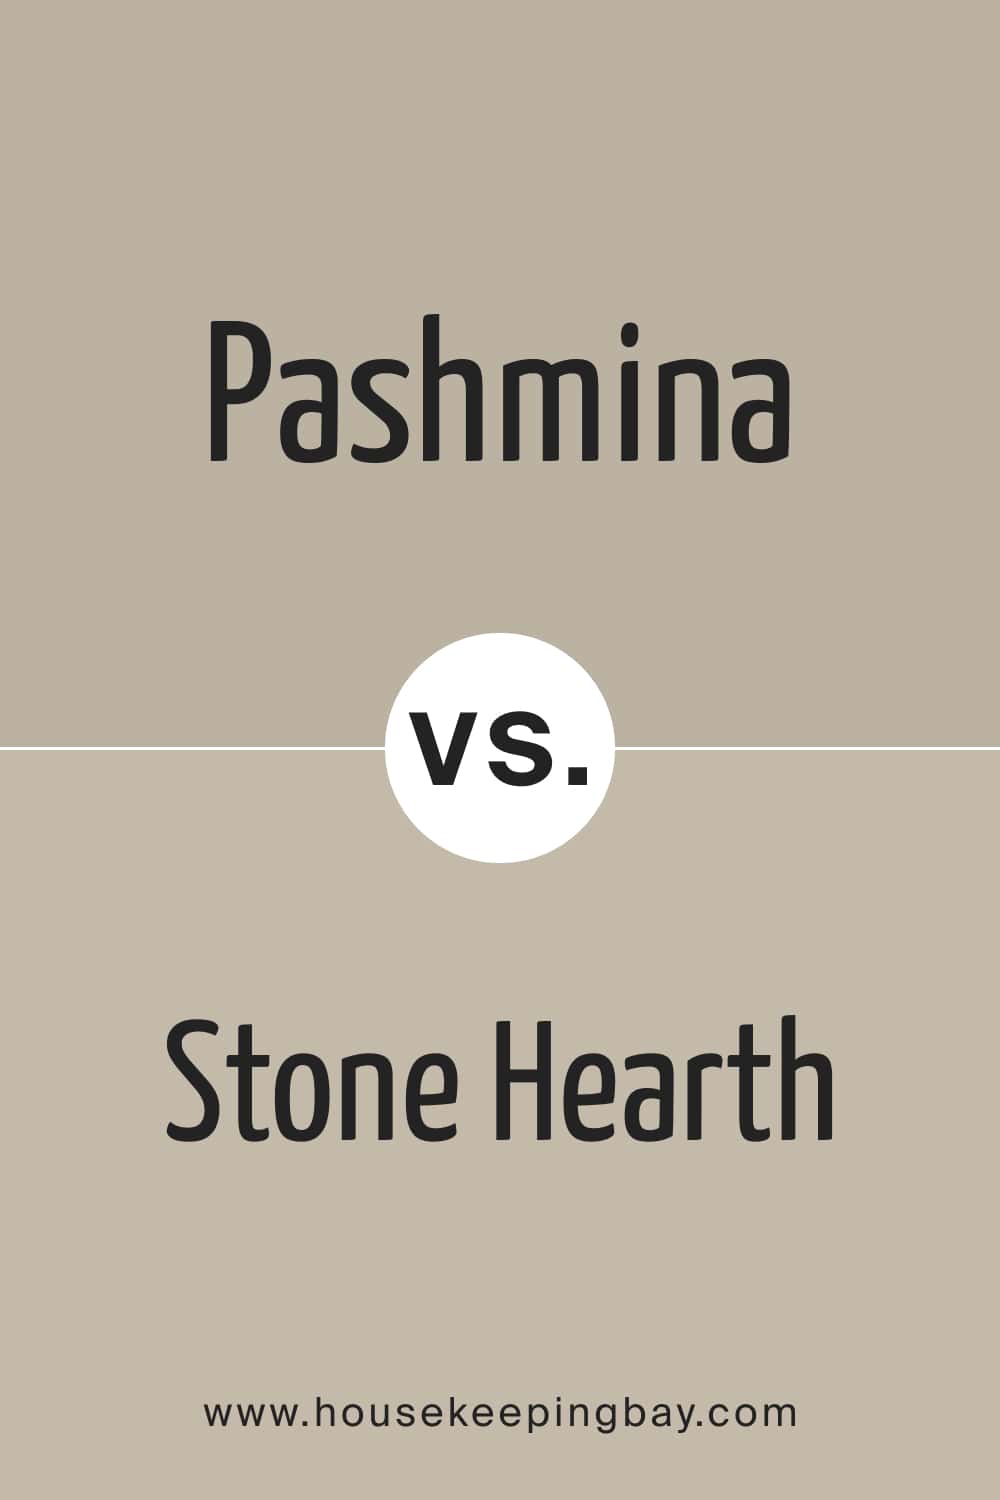 Pashmina vs Stone Hearth